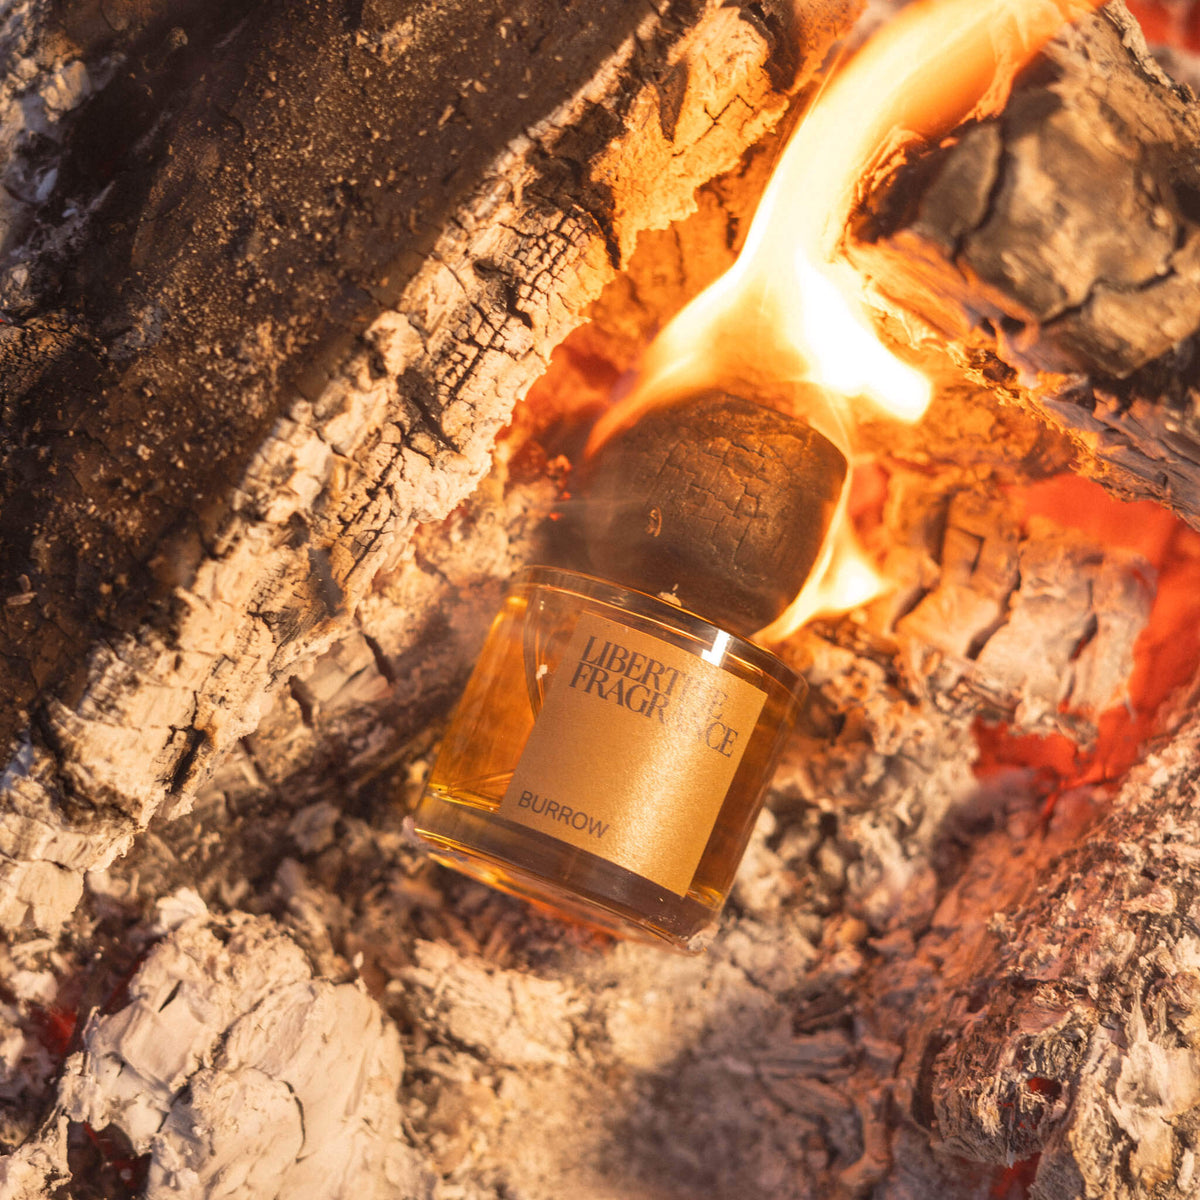 smokey Libertine perfume bottle in fire